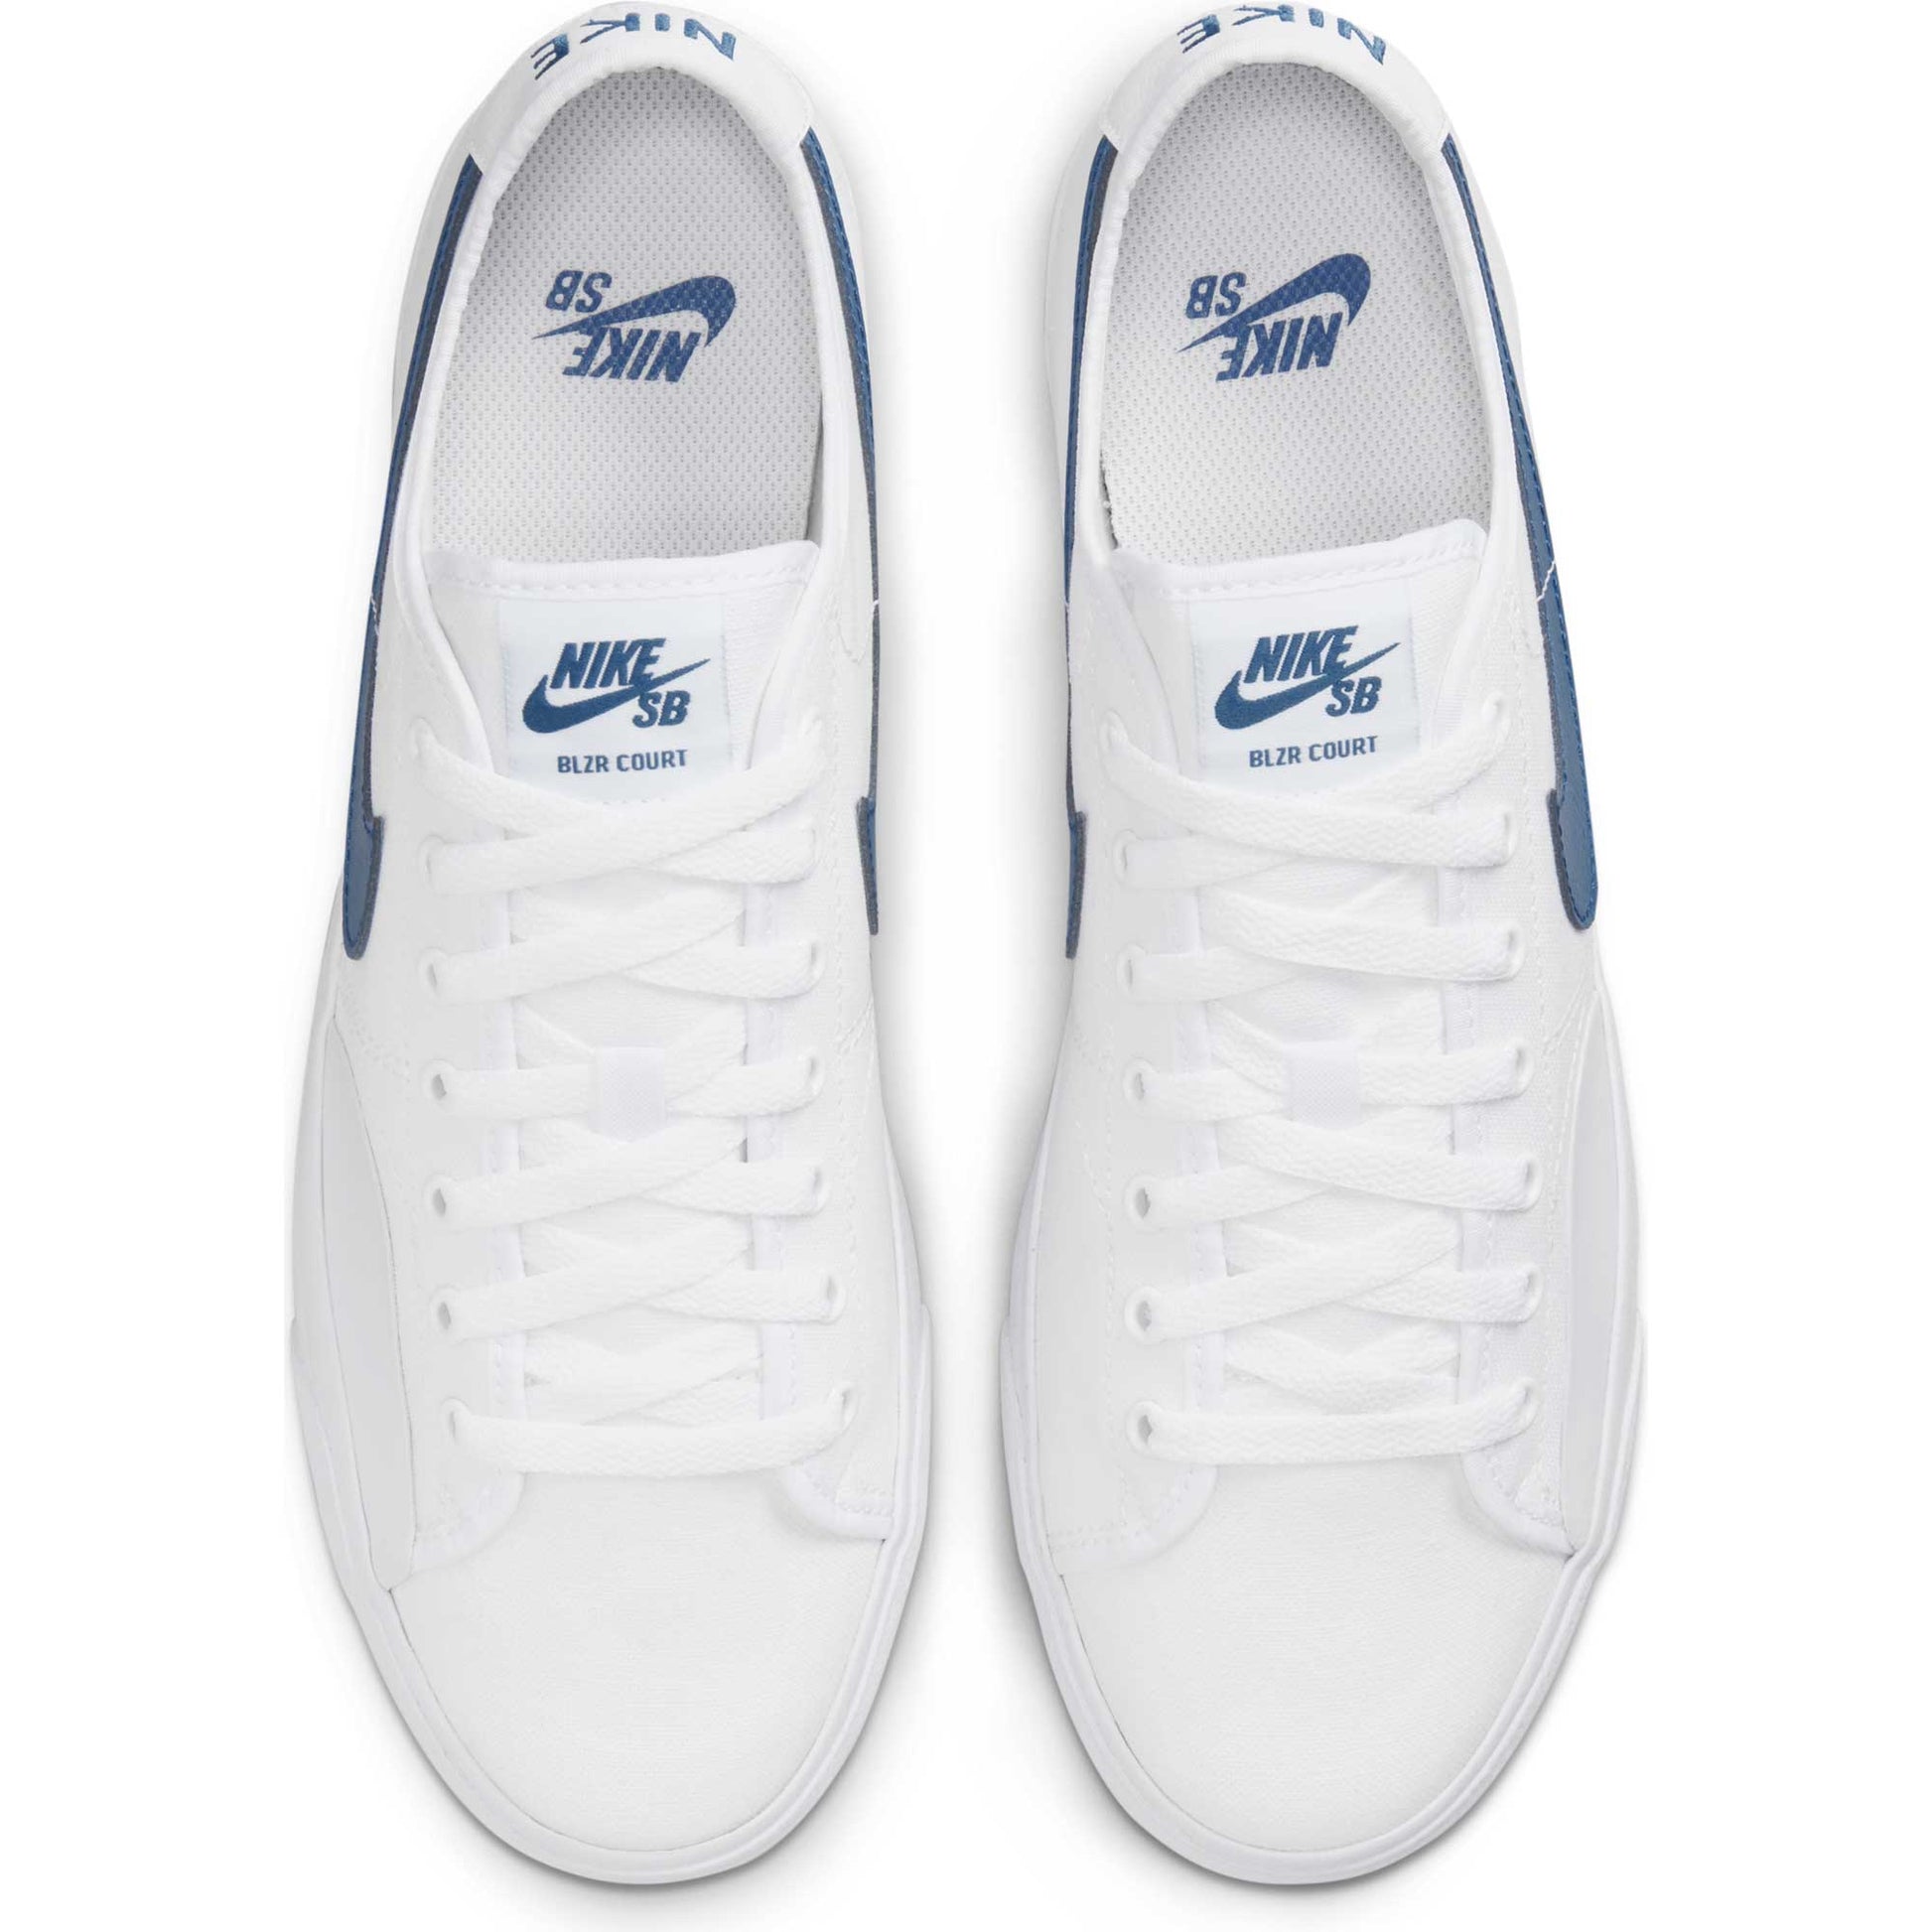 Nike SB BLZR Court, white/court blue-white-white - Tiki Room Skateboards - 4